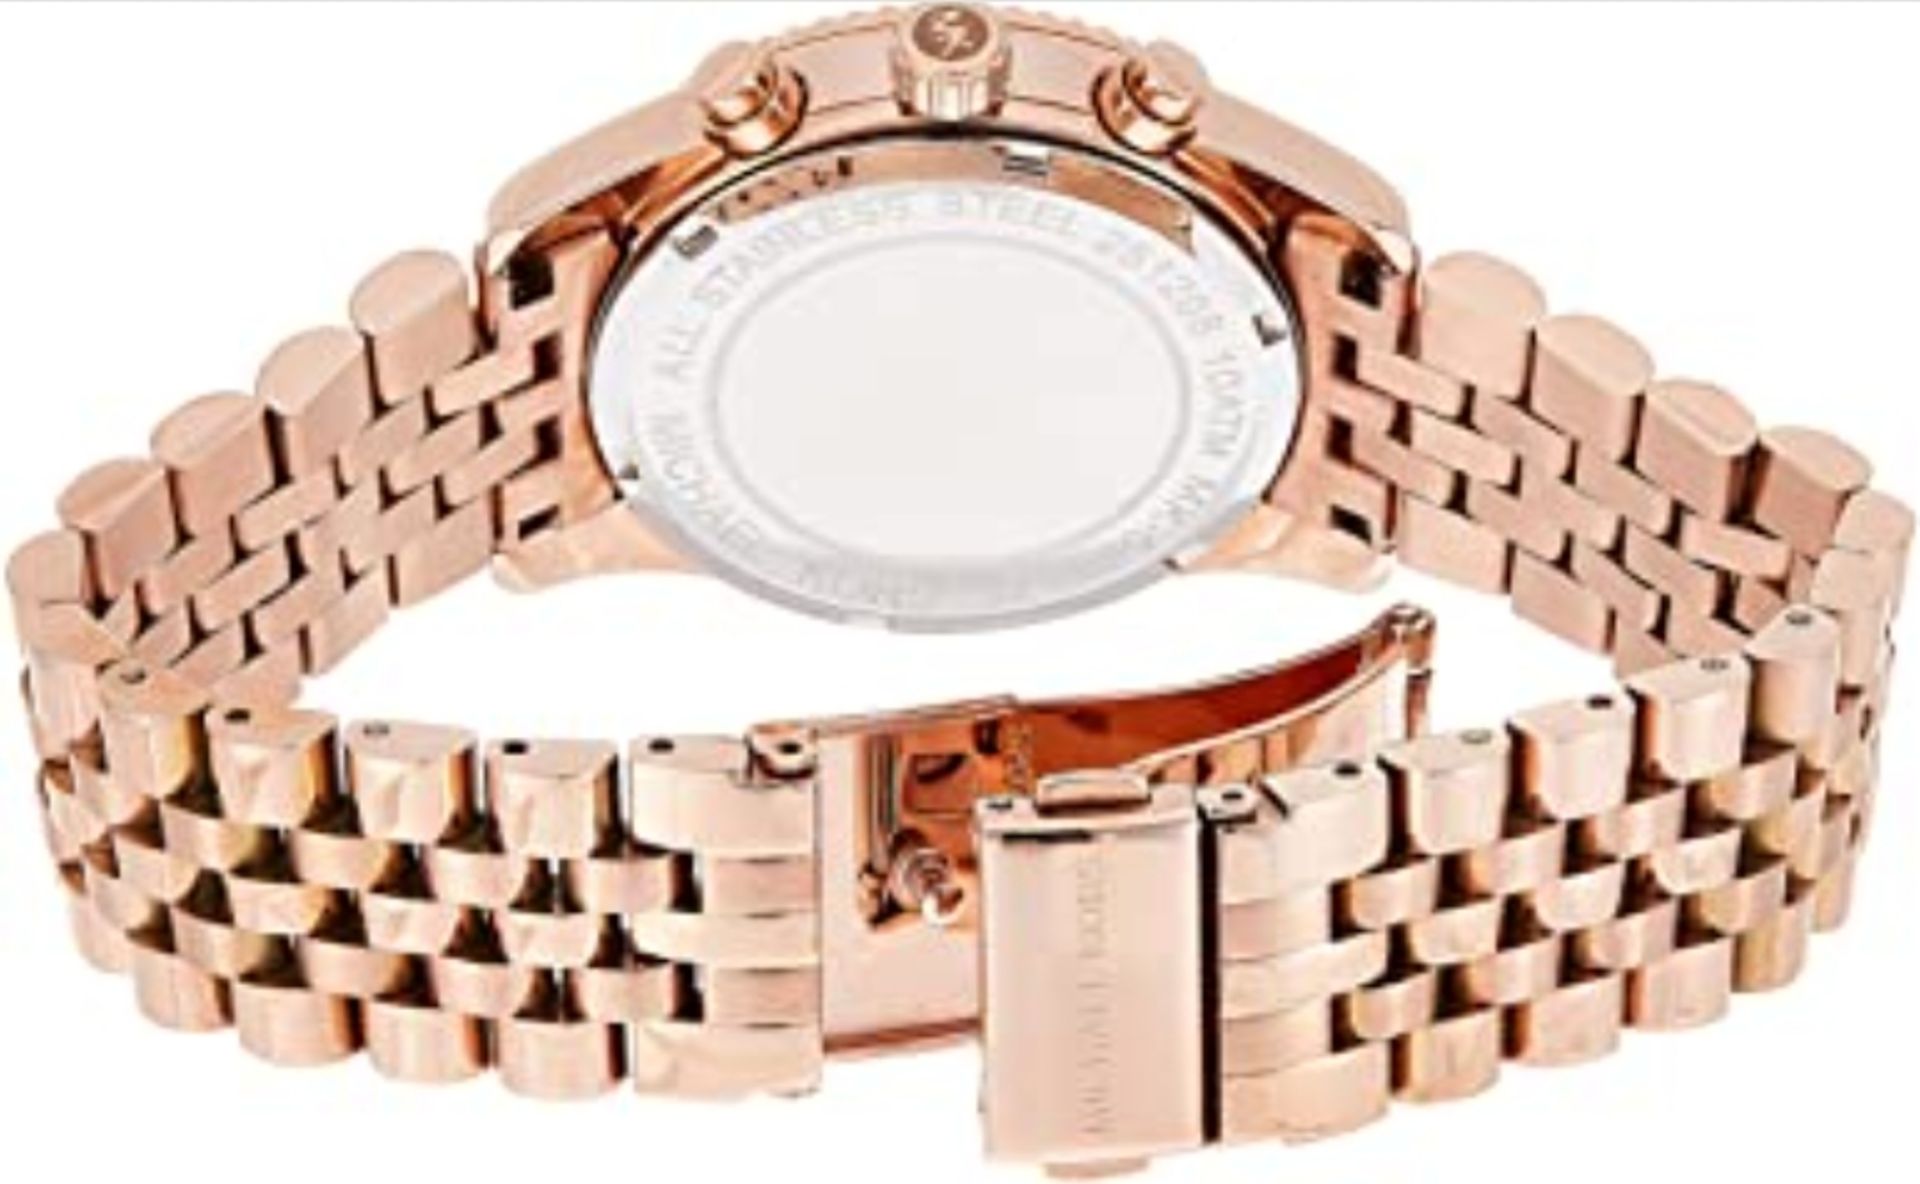 Michael Kors MK5569 Ladies Rose Gold Lexington Quartz Watch - Image 6 of 8